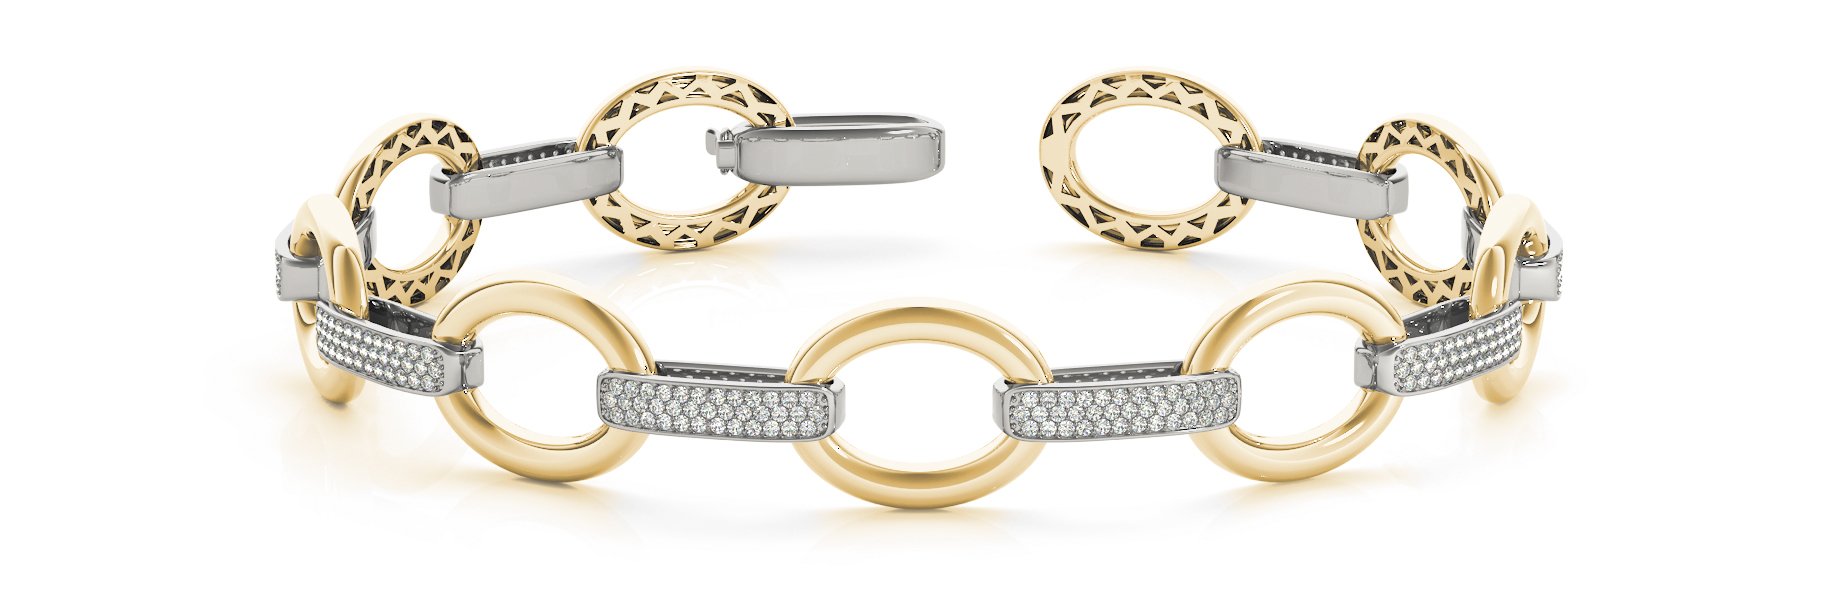 Fancy Diamond Bracelet Ladies 3.56ct tw - 14kt Yellow Gold